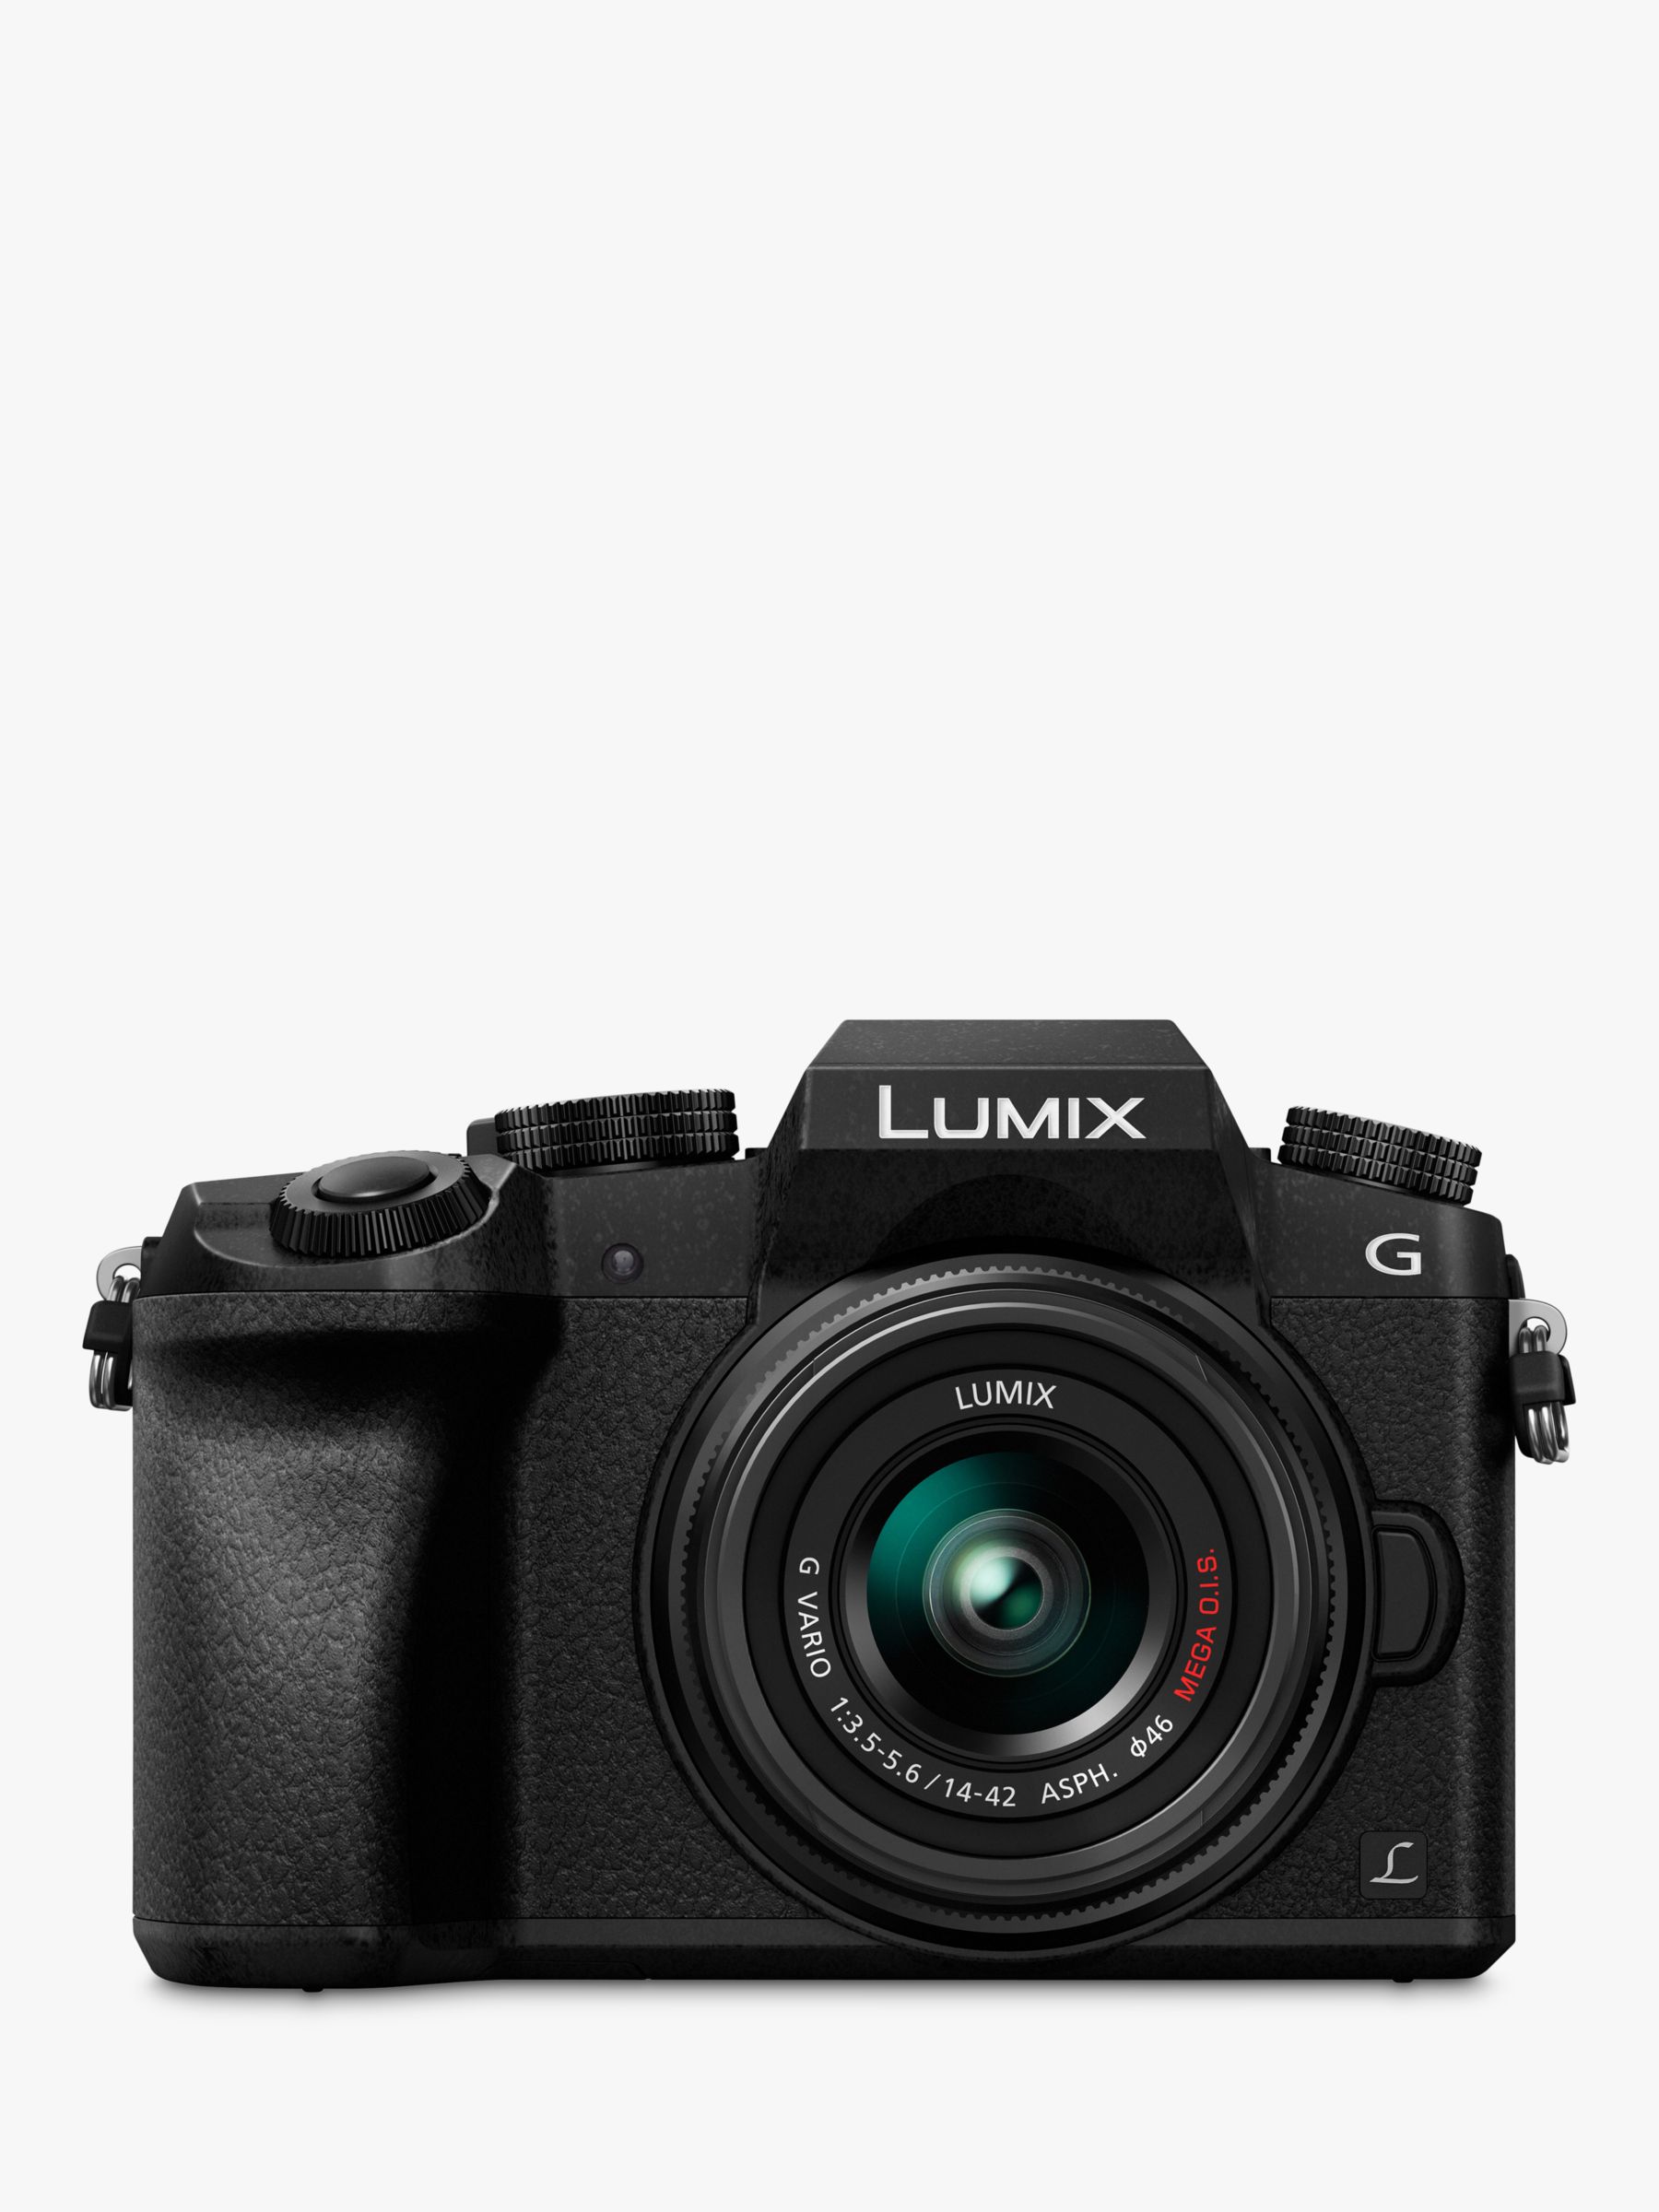 Panasonic Lumix DMC-G7 Compact System Camera with 14-42mm OIS Lens, 4K, 16MP, 4x Digital Zoom, Wi-Fi, OLED Viewfinder, 3 Tilt Screen Display